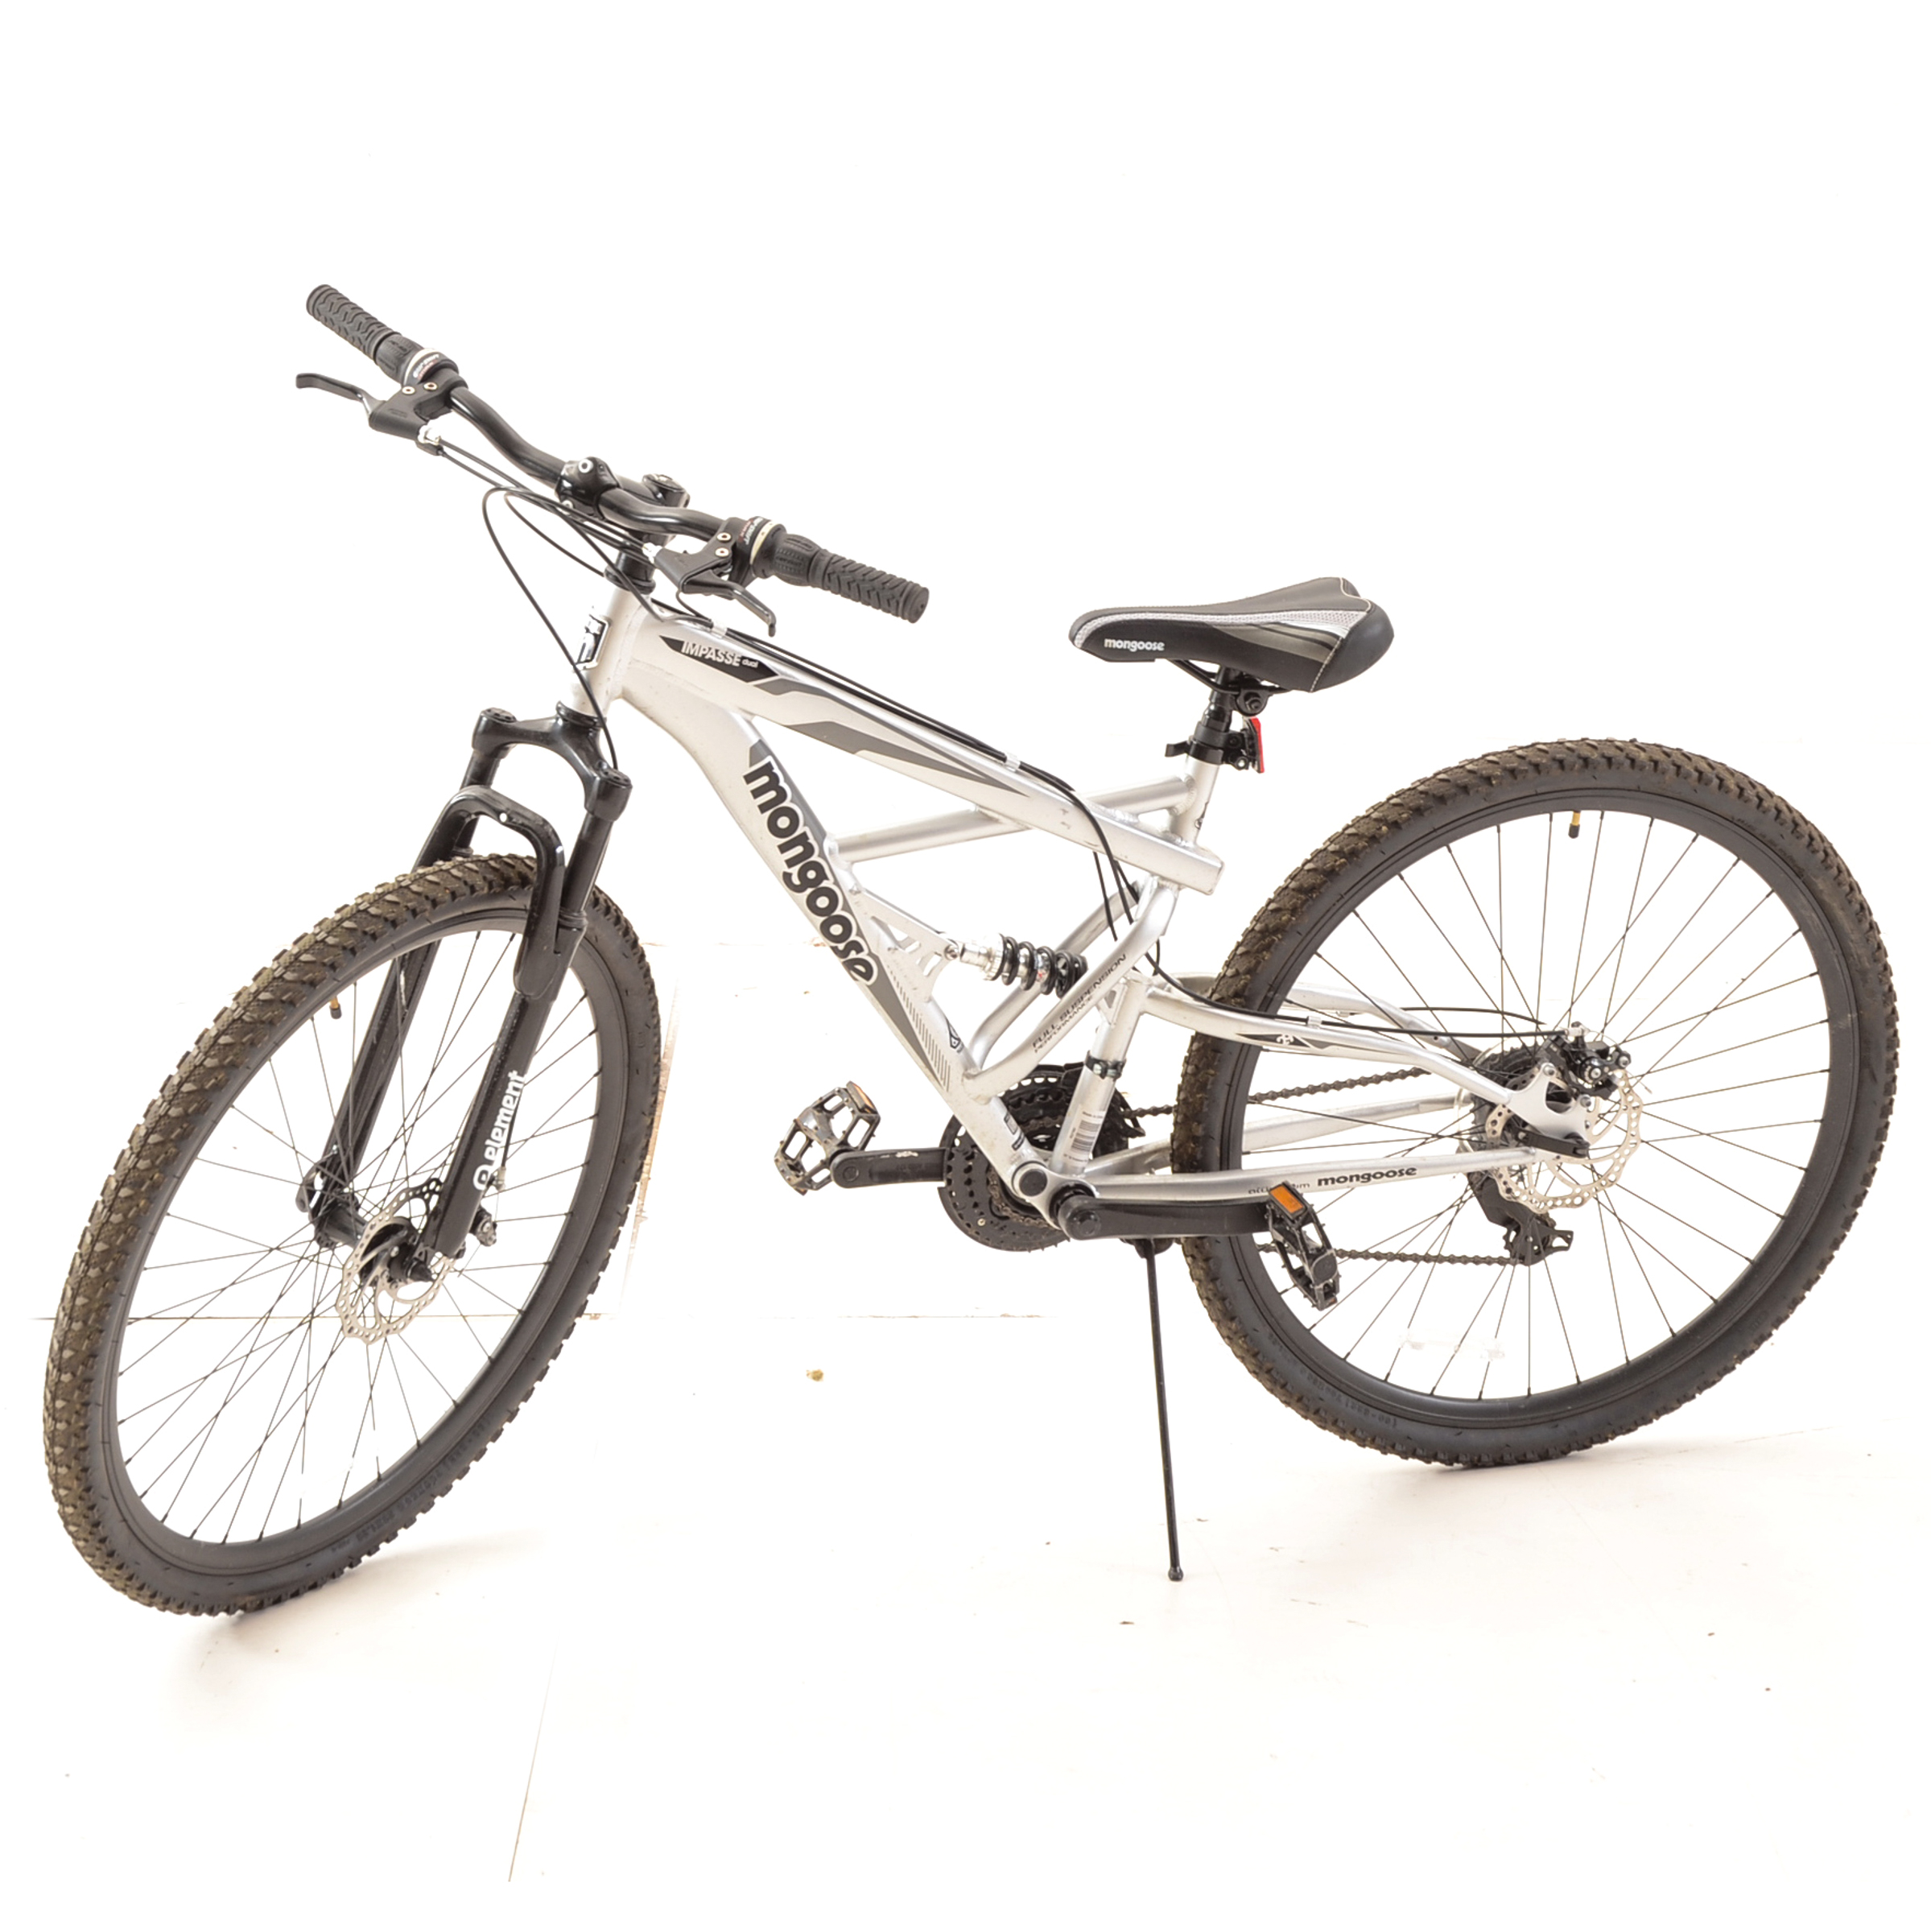 mongoose r2780 impasse dual full suspension bicycle